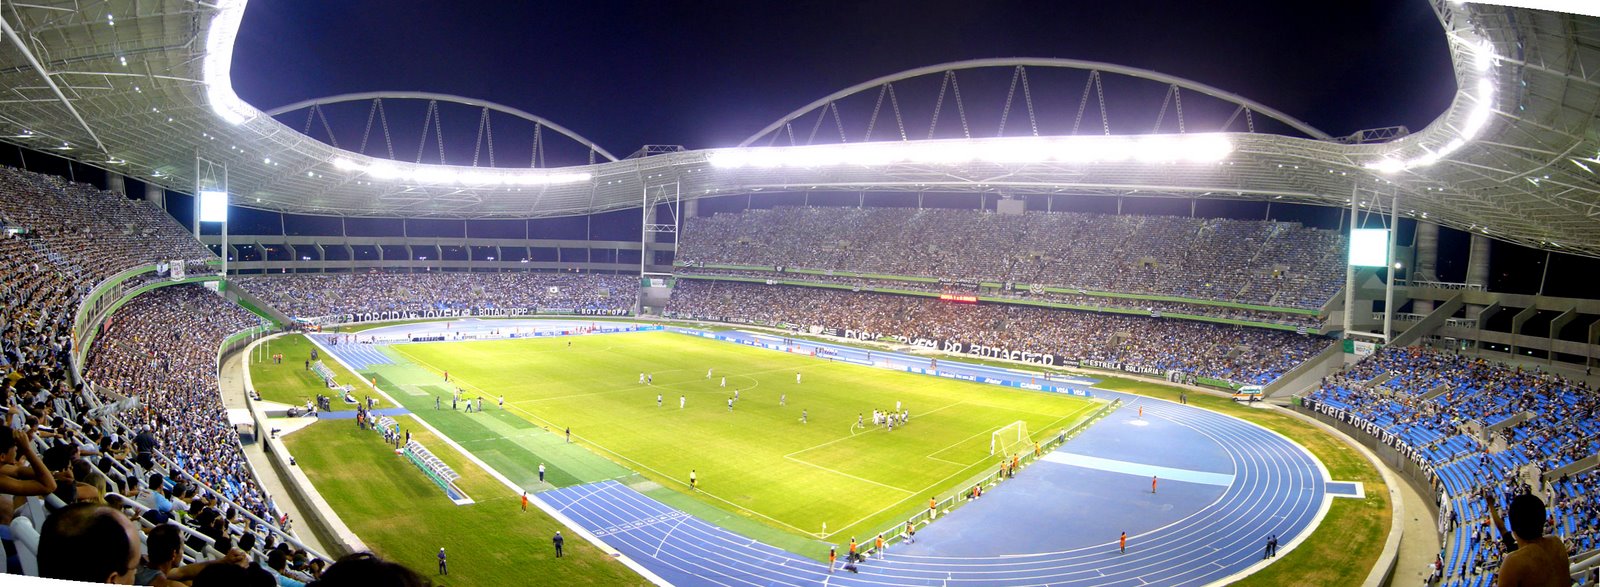 Joo_Havelange_Stadium_at_night